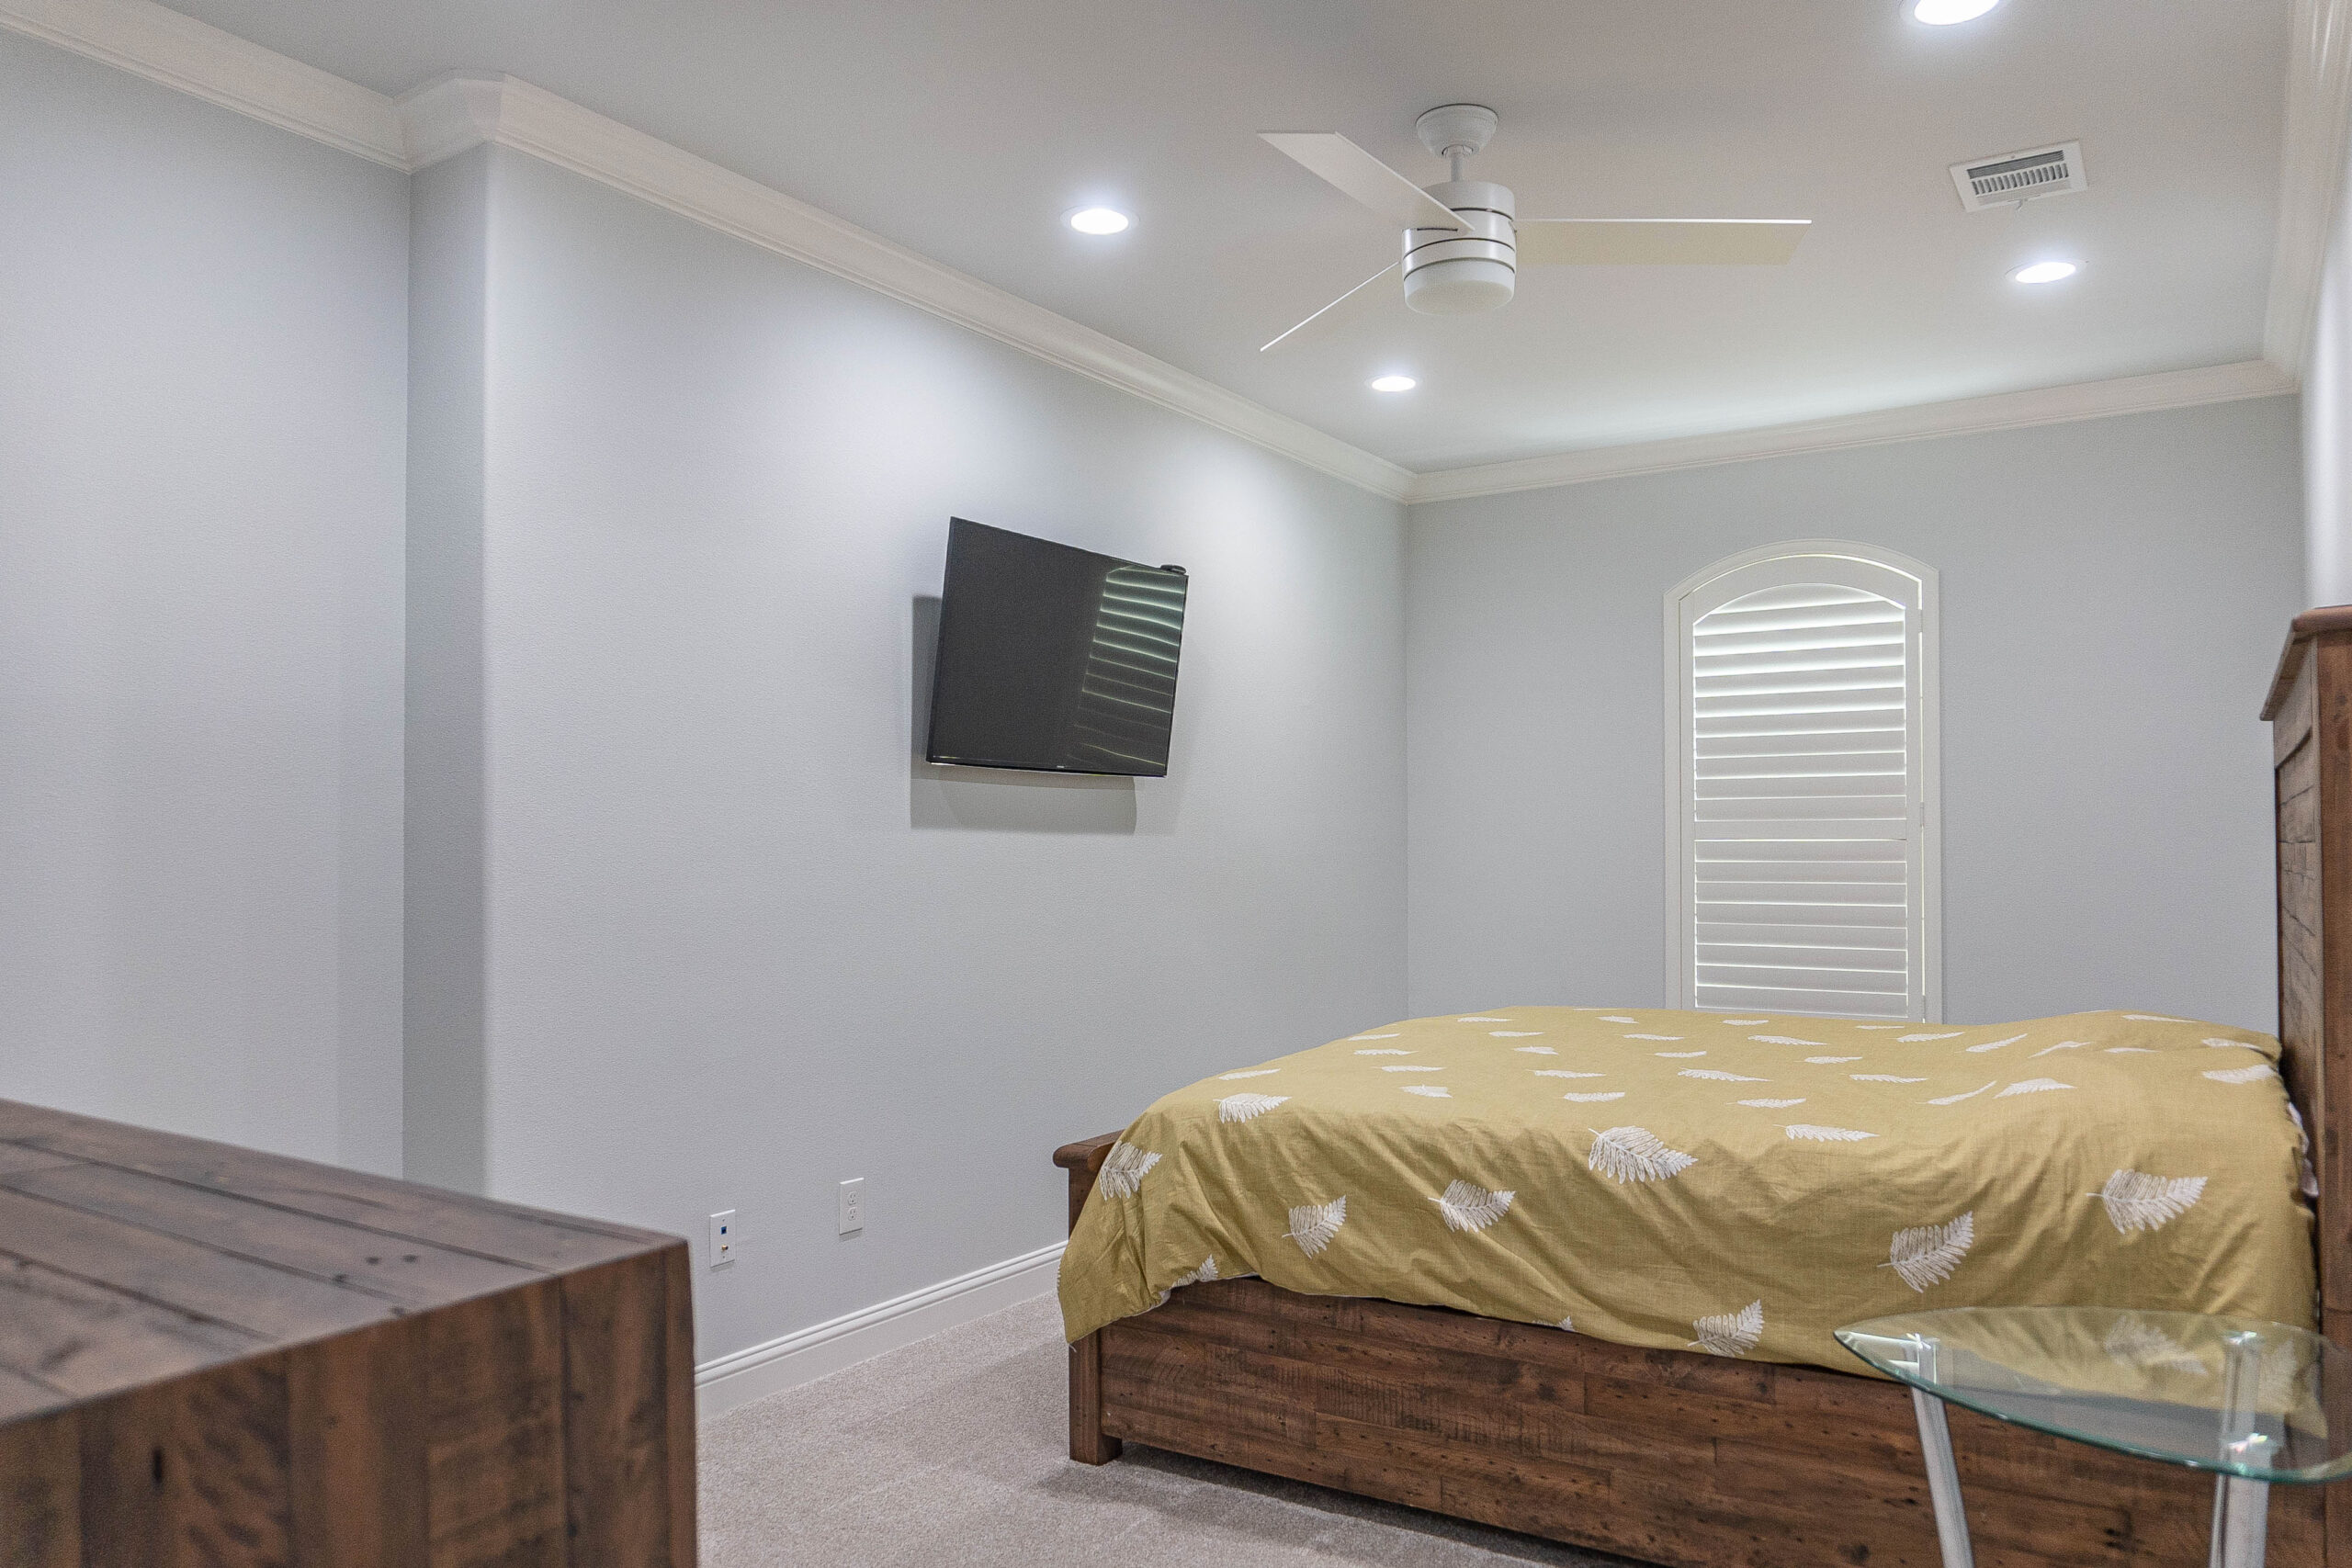 Esplanade modern home bedroom tan carpet blue walls white trim